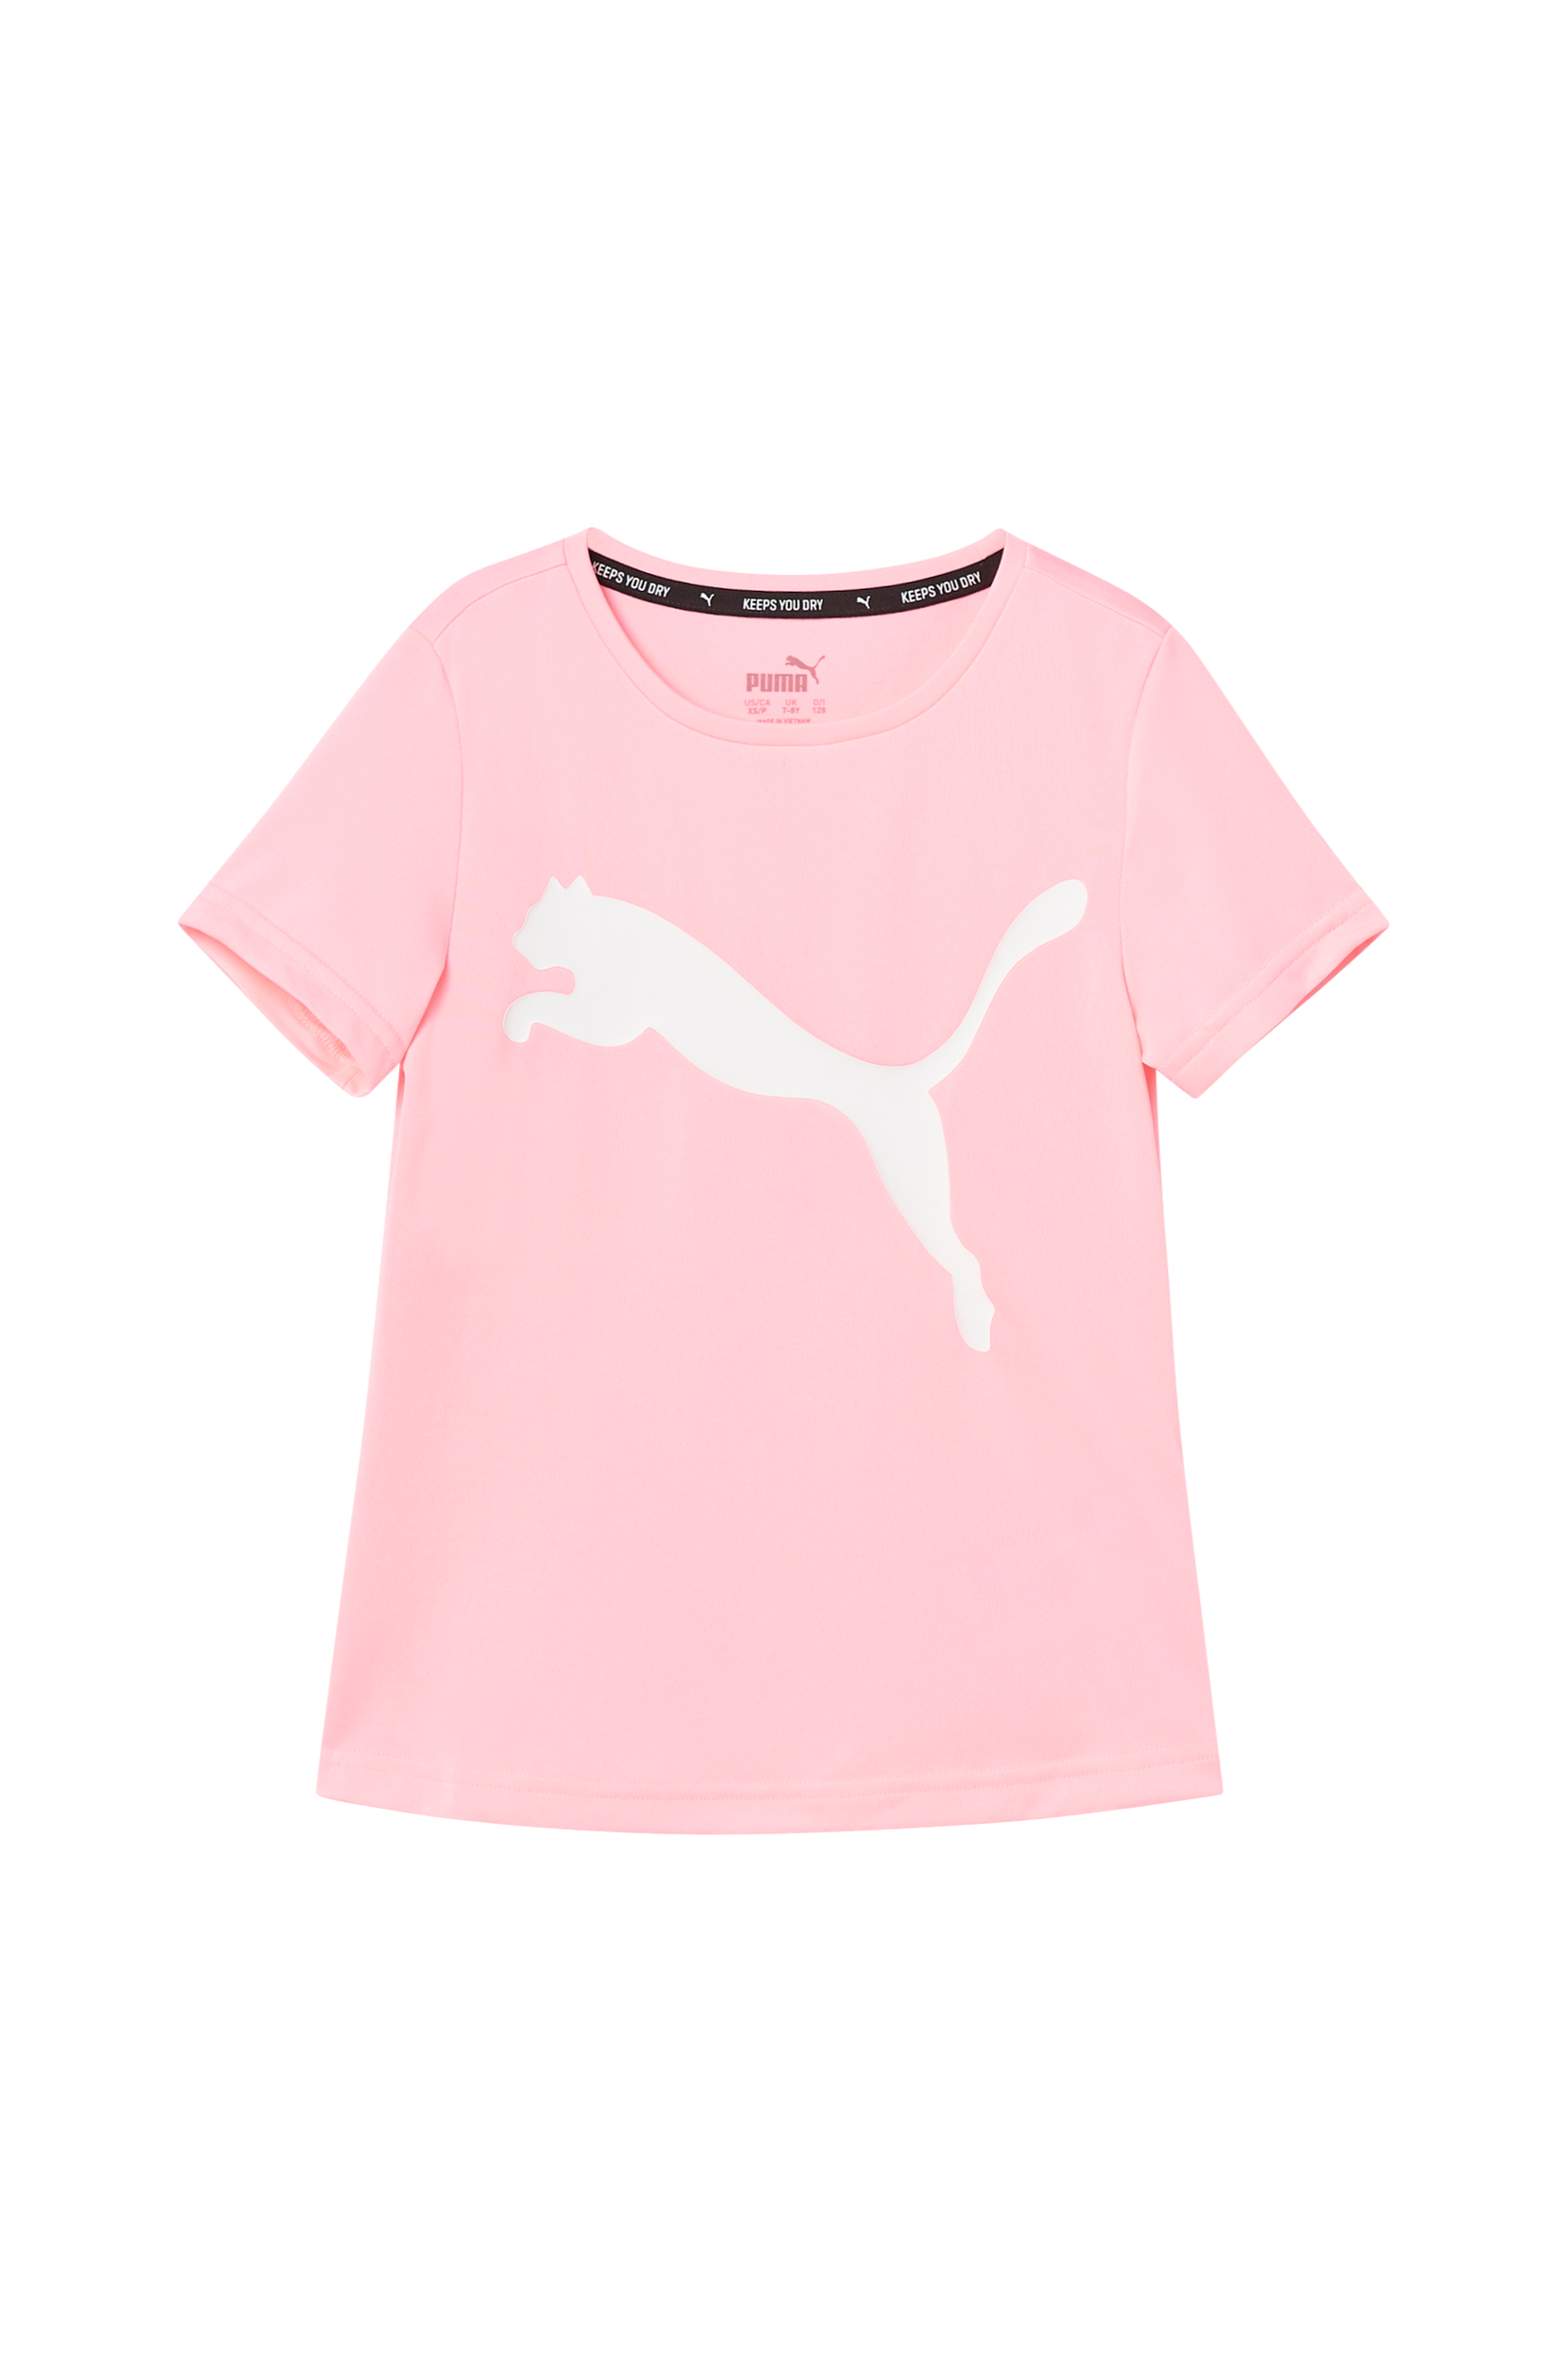 Puma - Trænings-T-shirt T G - Rosa - 140 - Diverse - Tøj børn (31171046)